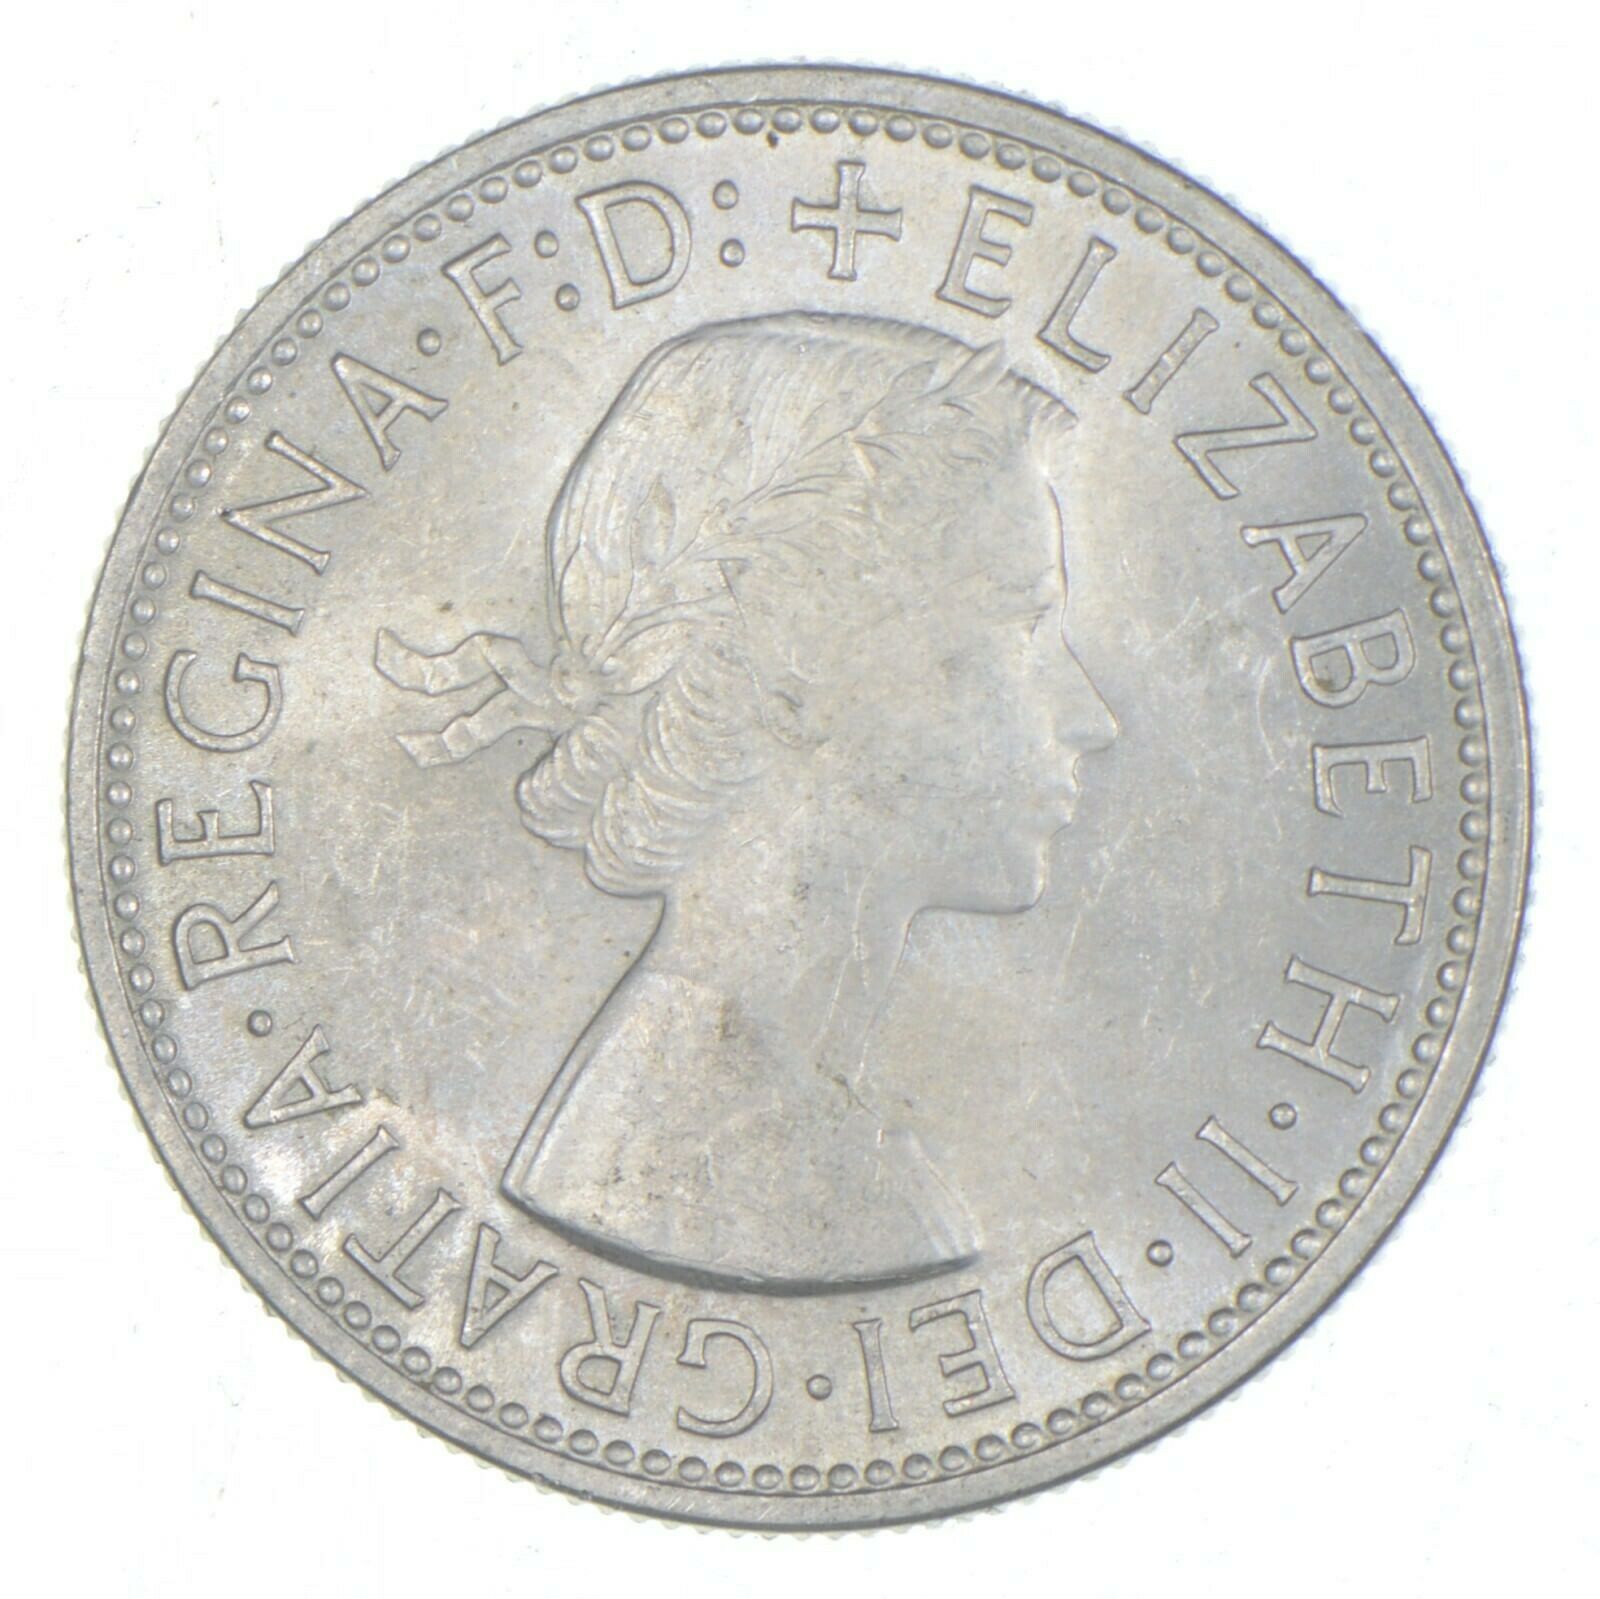 Silver Roughly Size Of Quarter 1959 Australia 1 Florin World Silver Coin *575